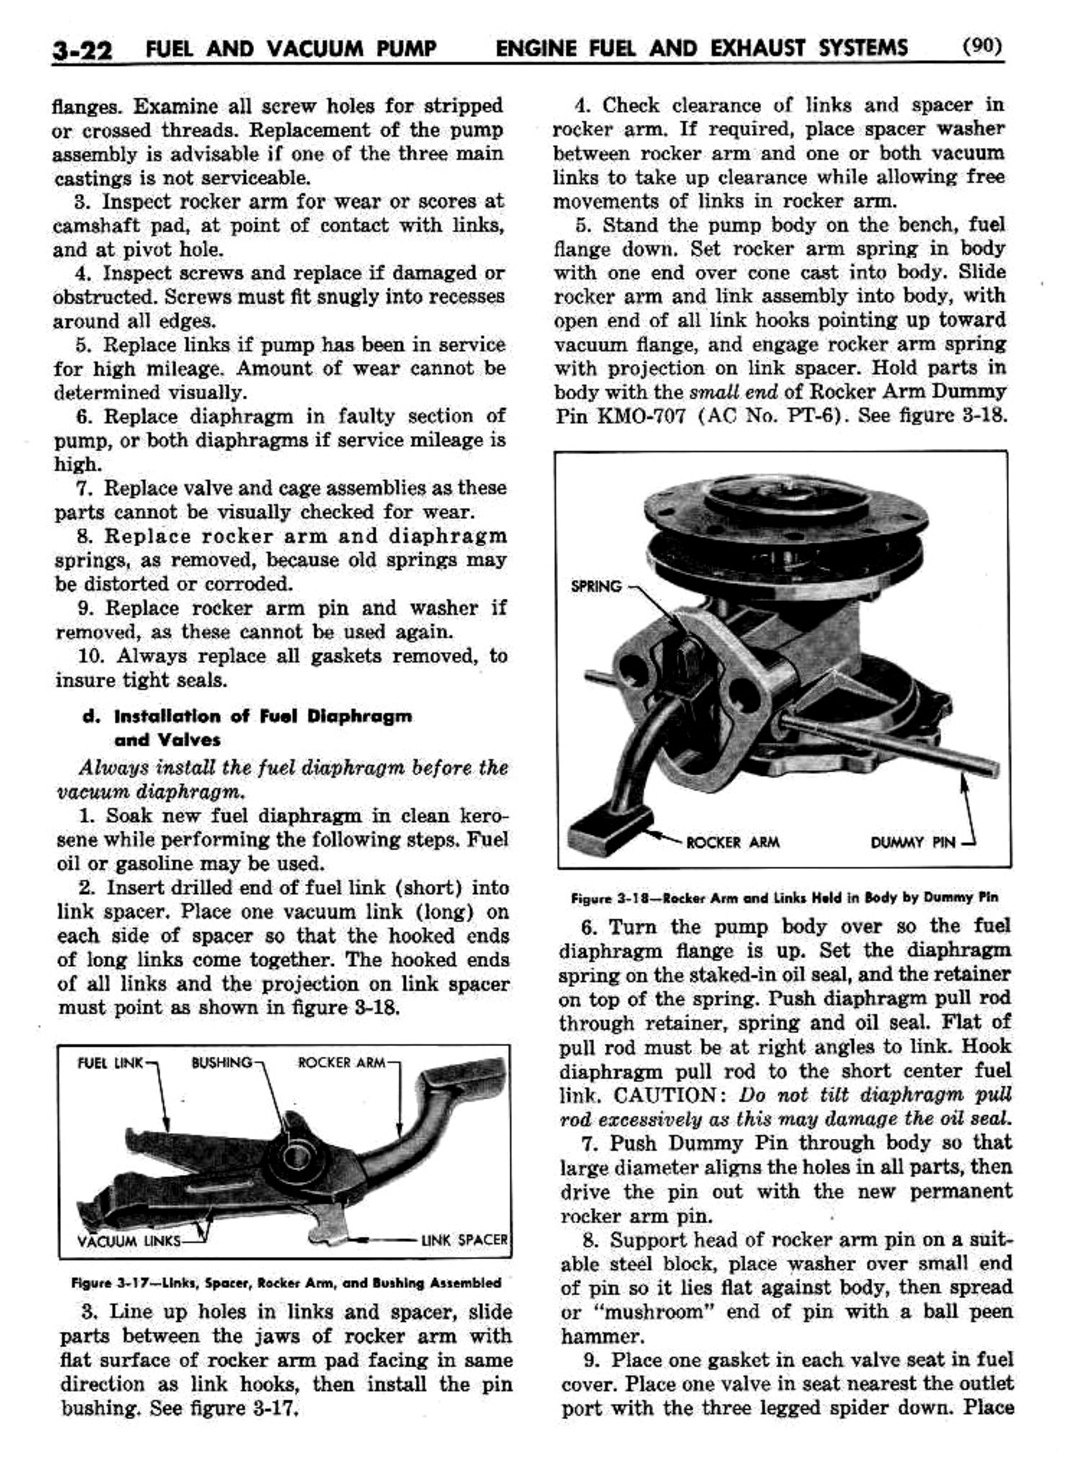 n_04 1951 Buick Shop Manual - Engine Fuel & Exhaust-022-022.jpg